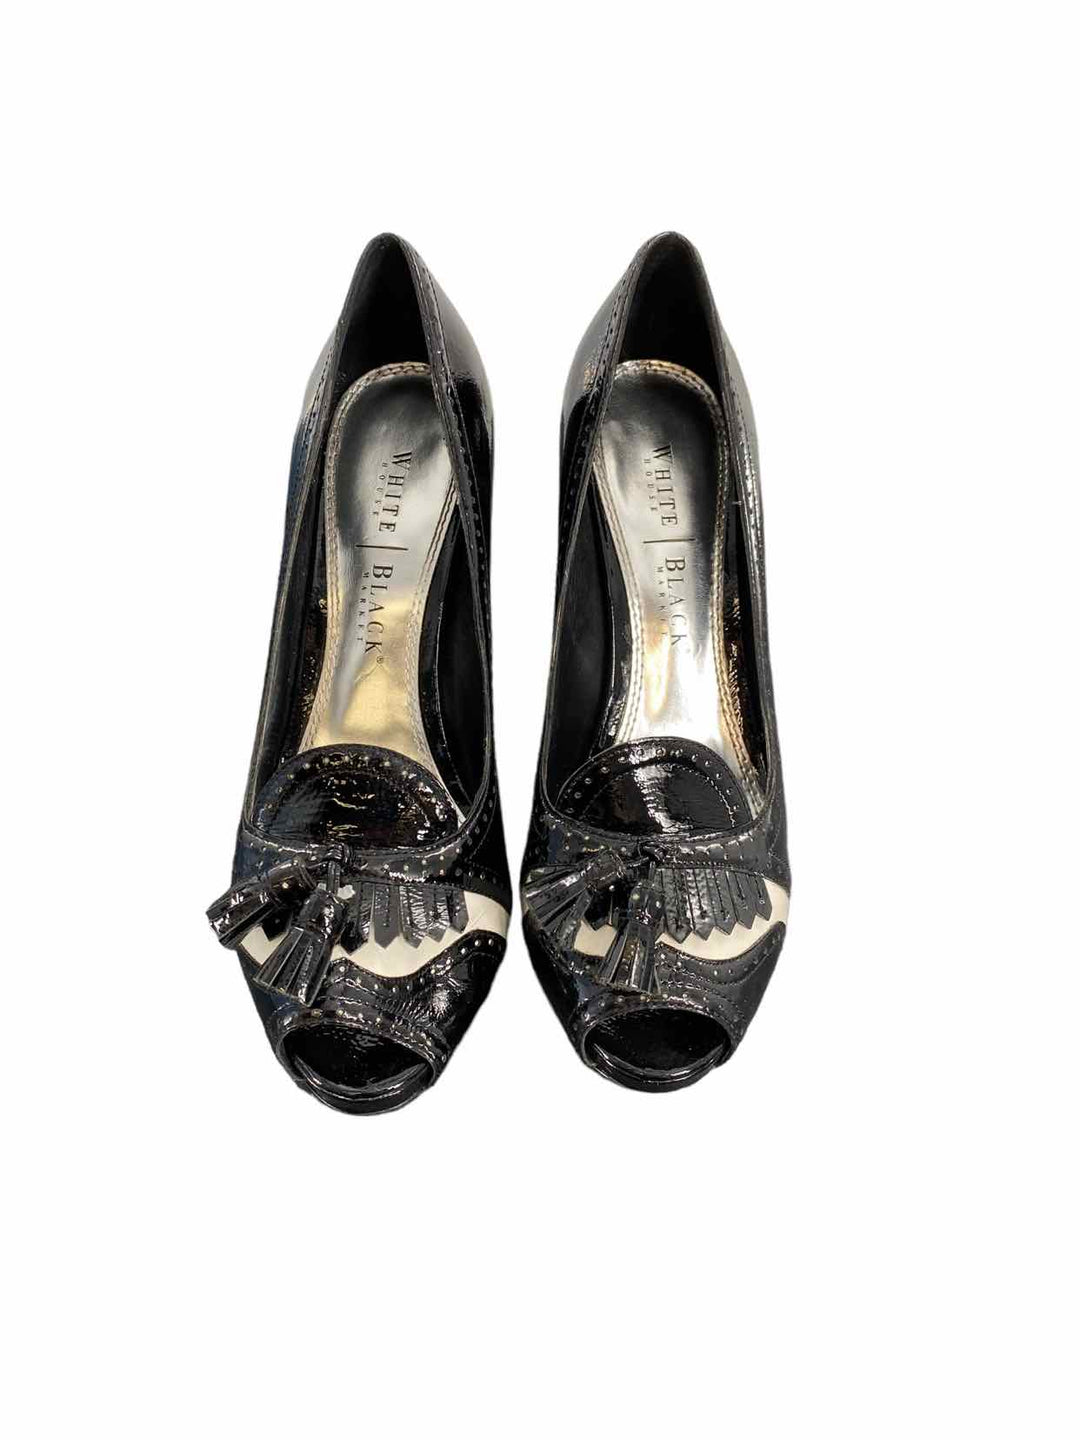 White House Black Market Shoe Size 8 Black White Heels